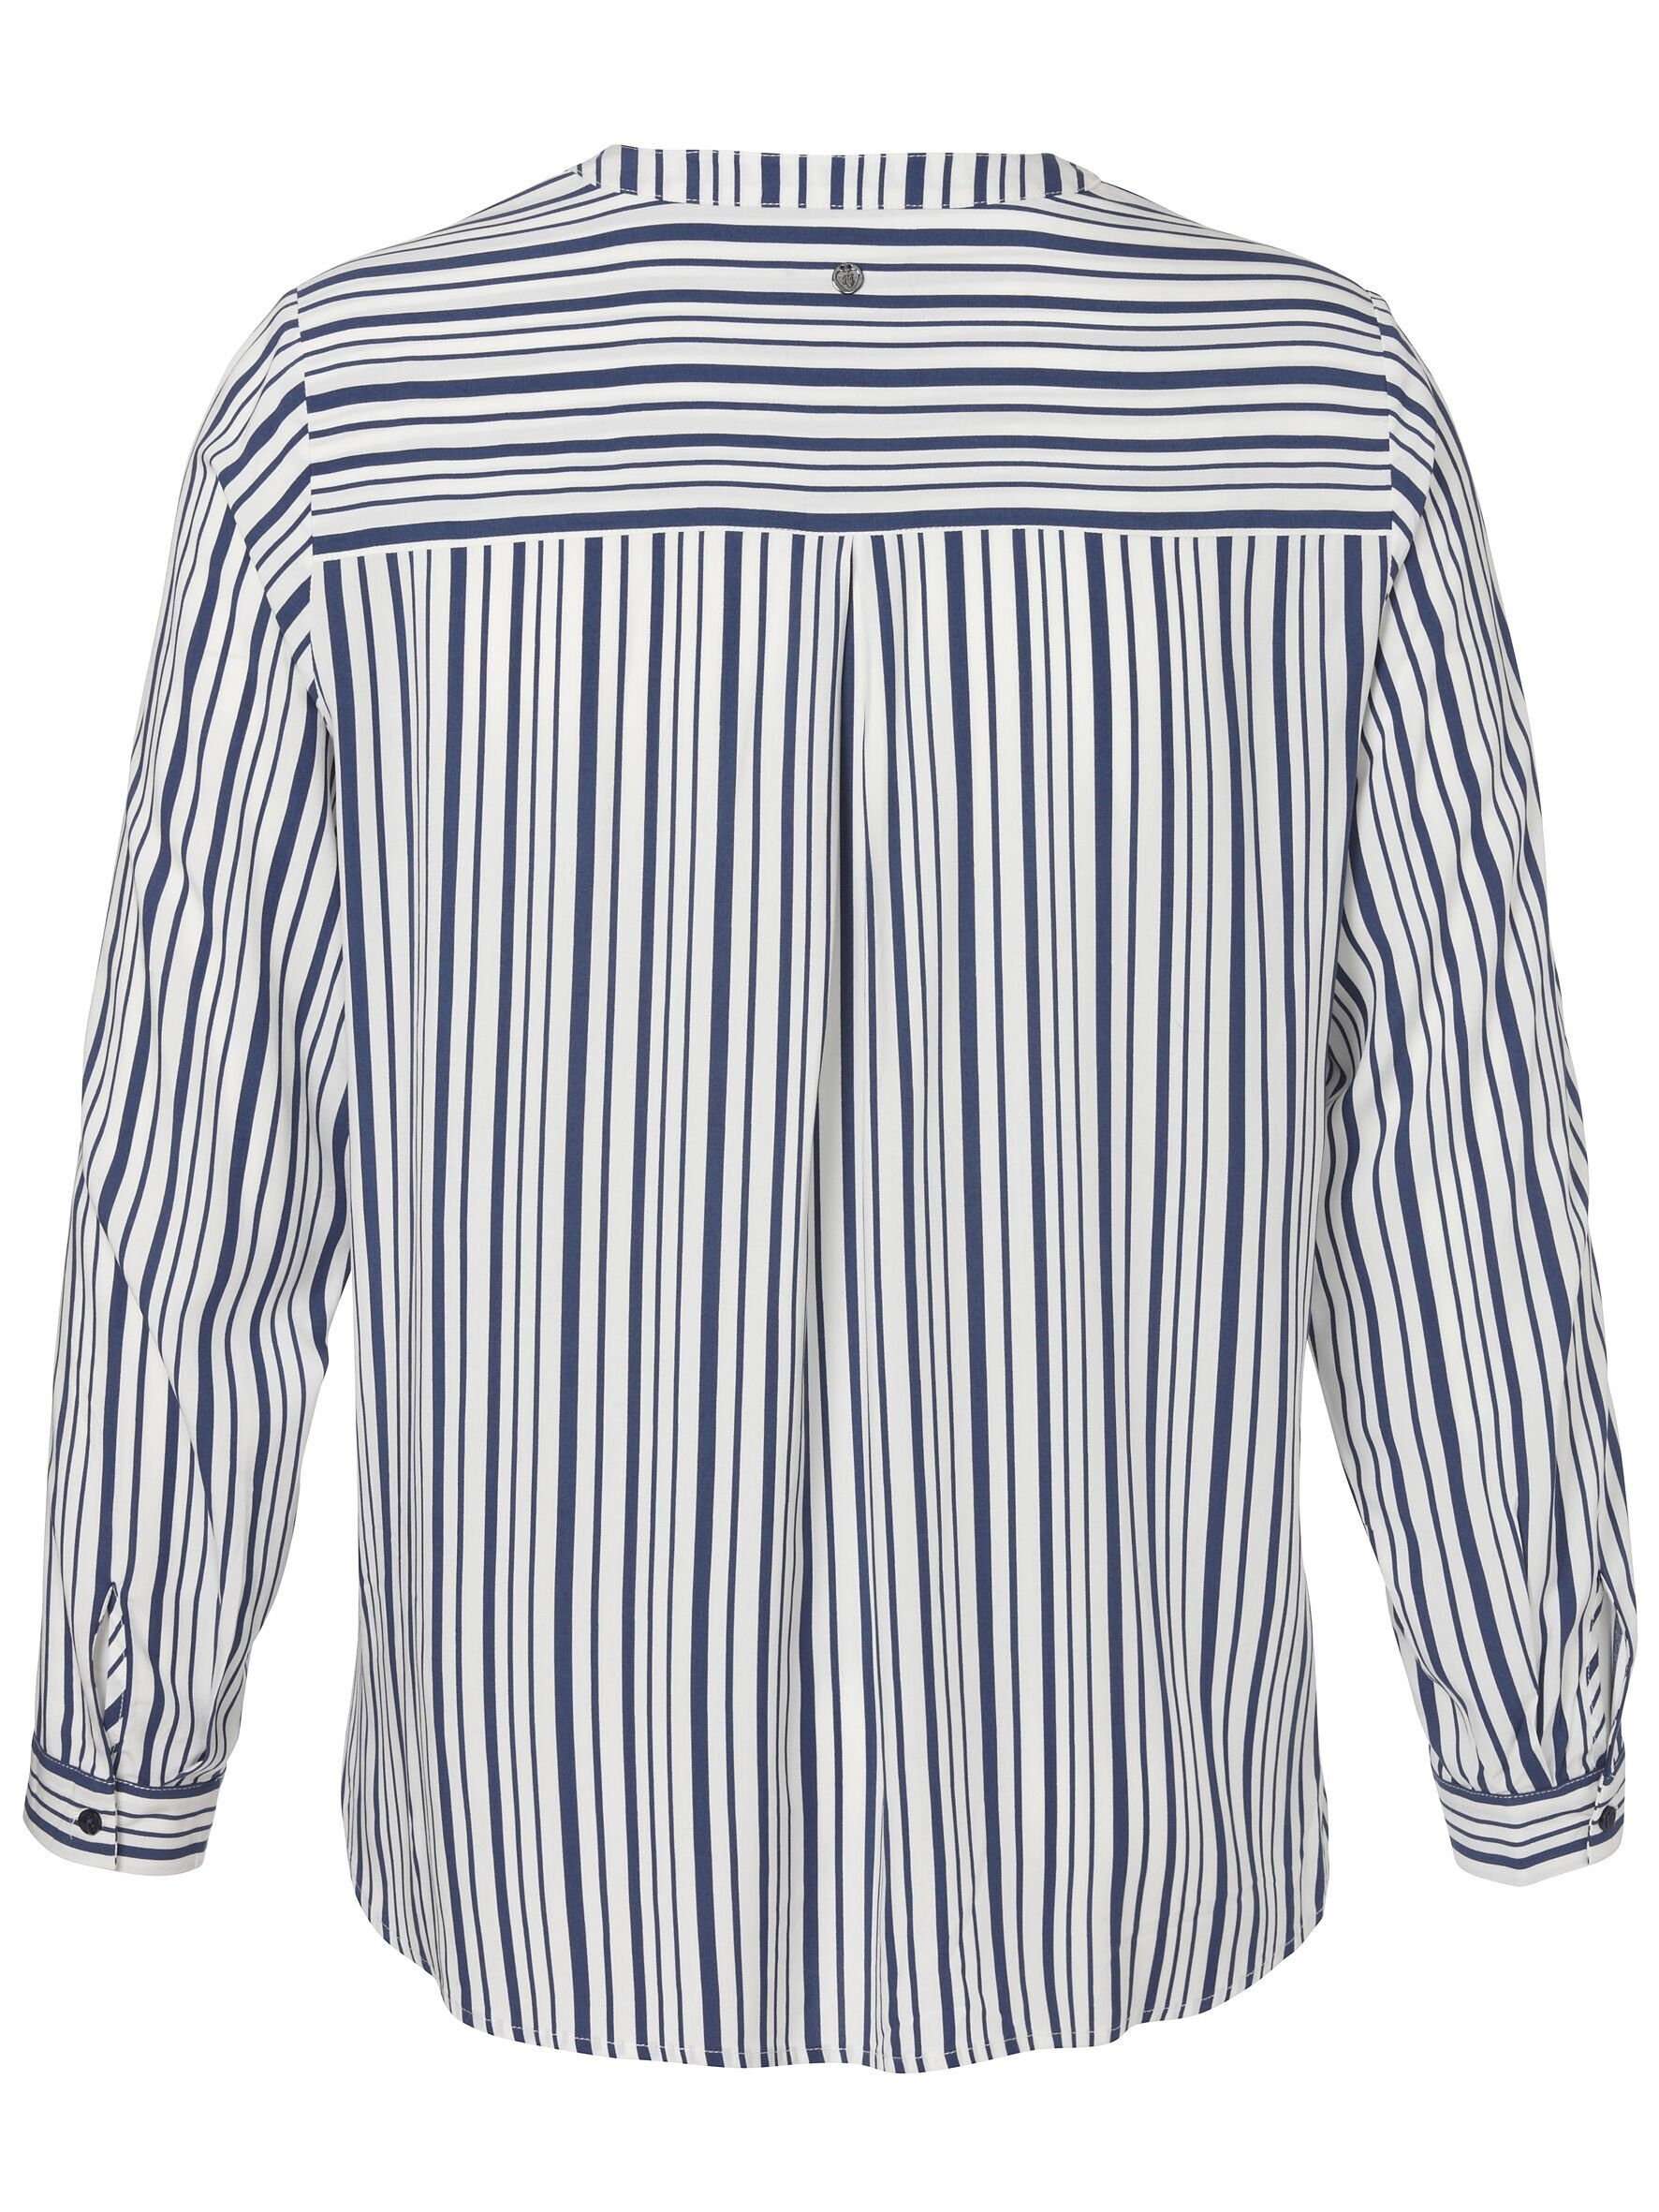 Klassische Bluse FRAPP Allover-Muster mit gestreiftem